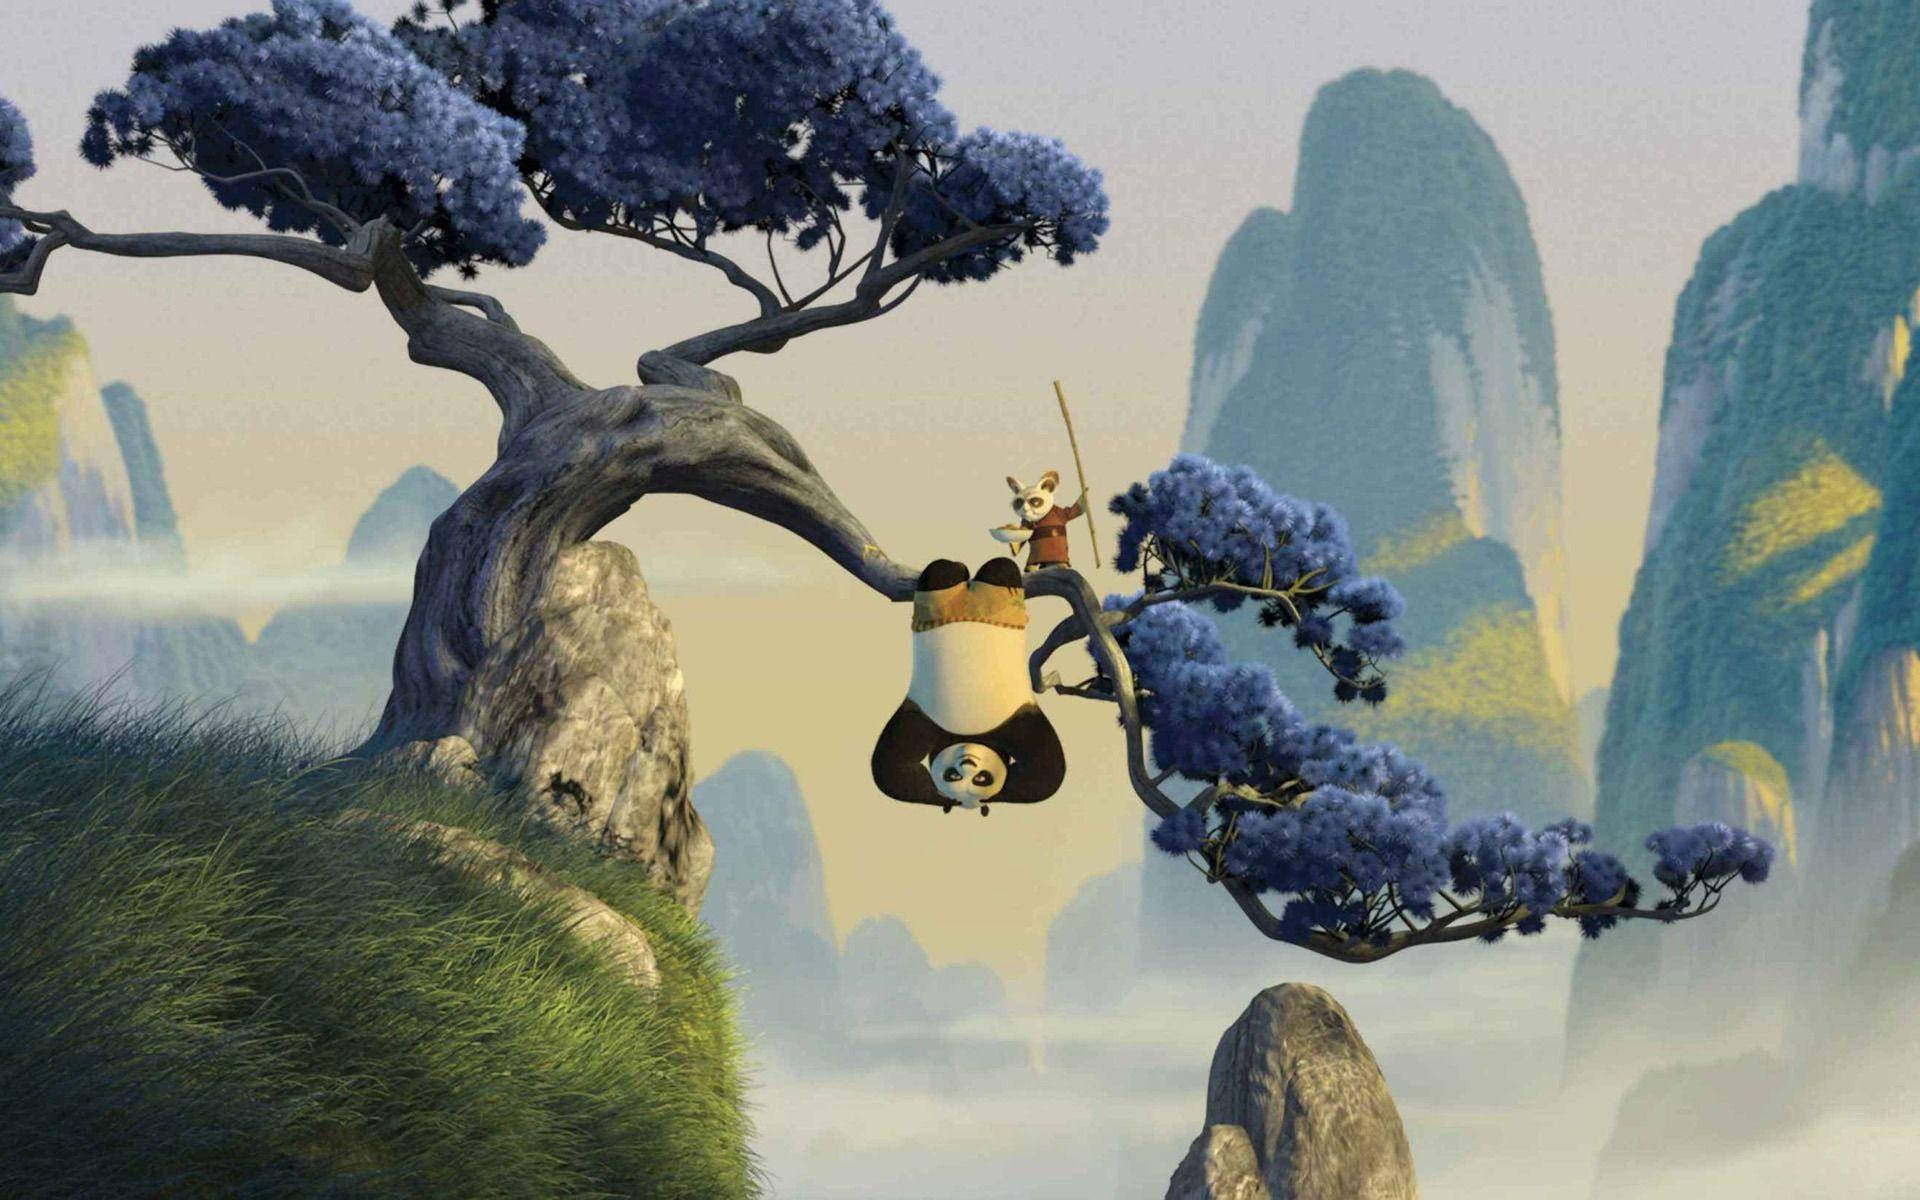 Kung Fu Panda And Shifu Training Together Wallpaper